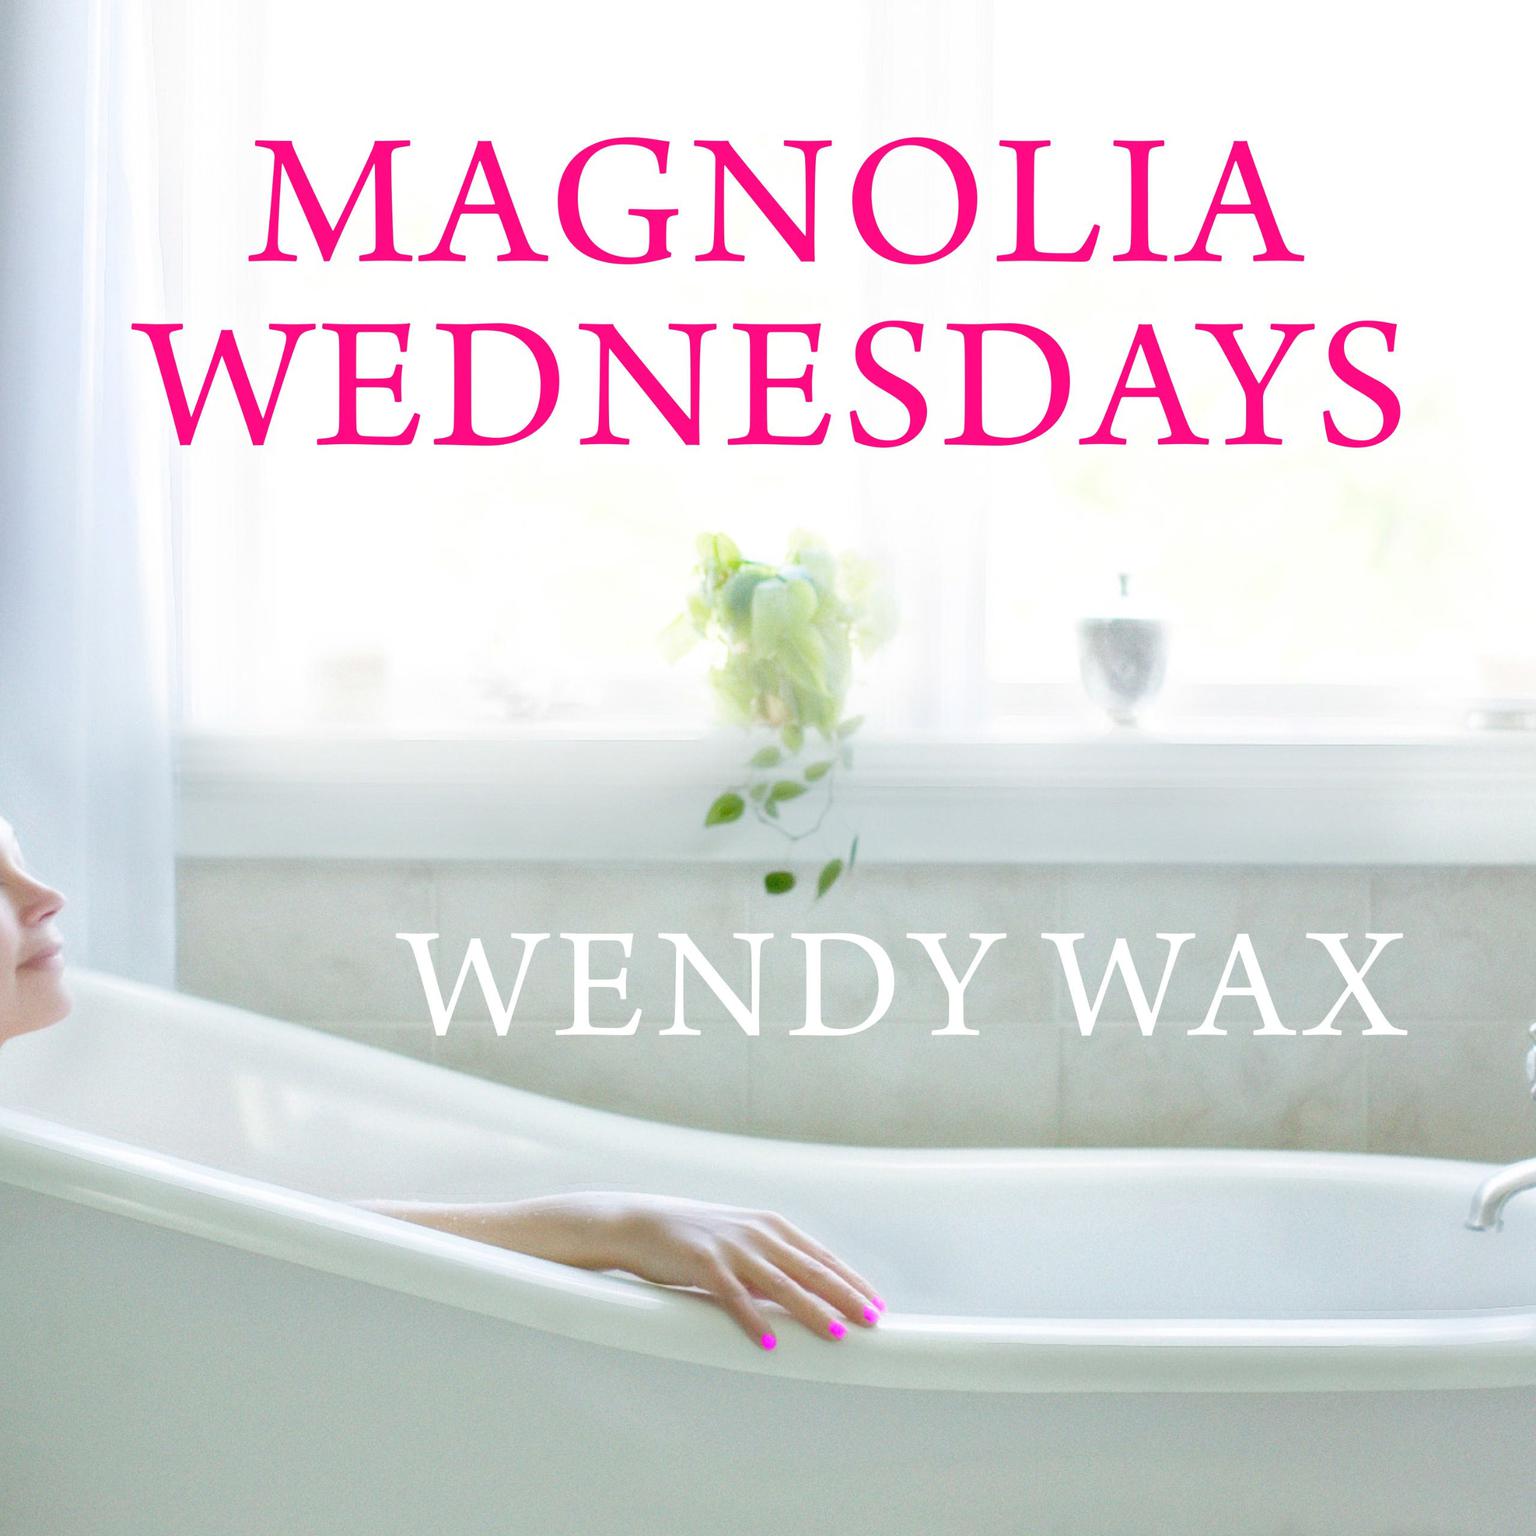 Magnolia Wednesdays Audiobook, by Wendy Wax